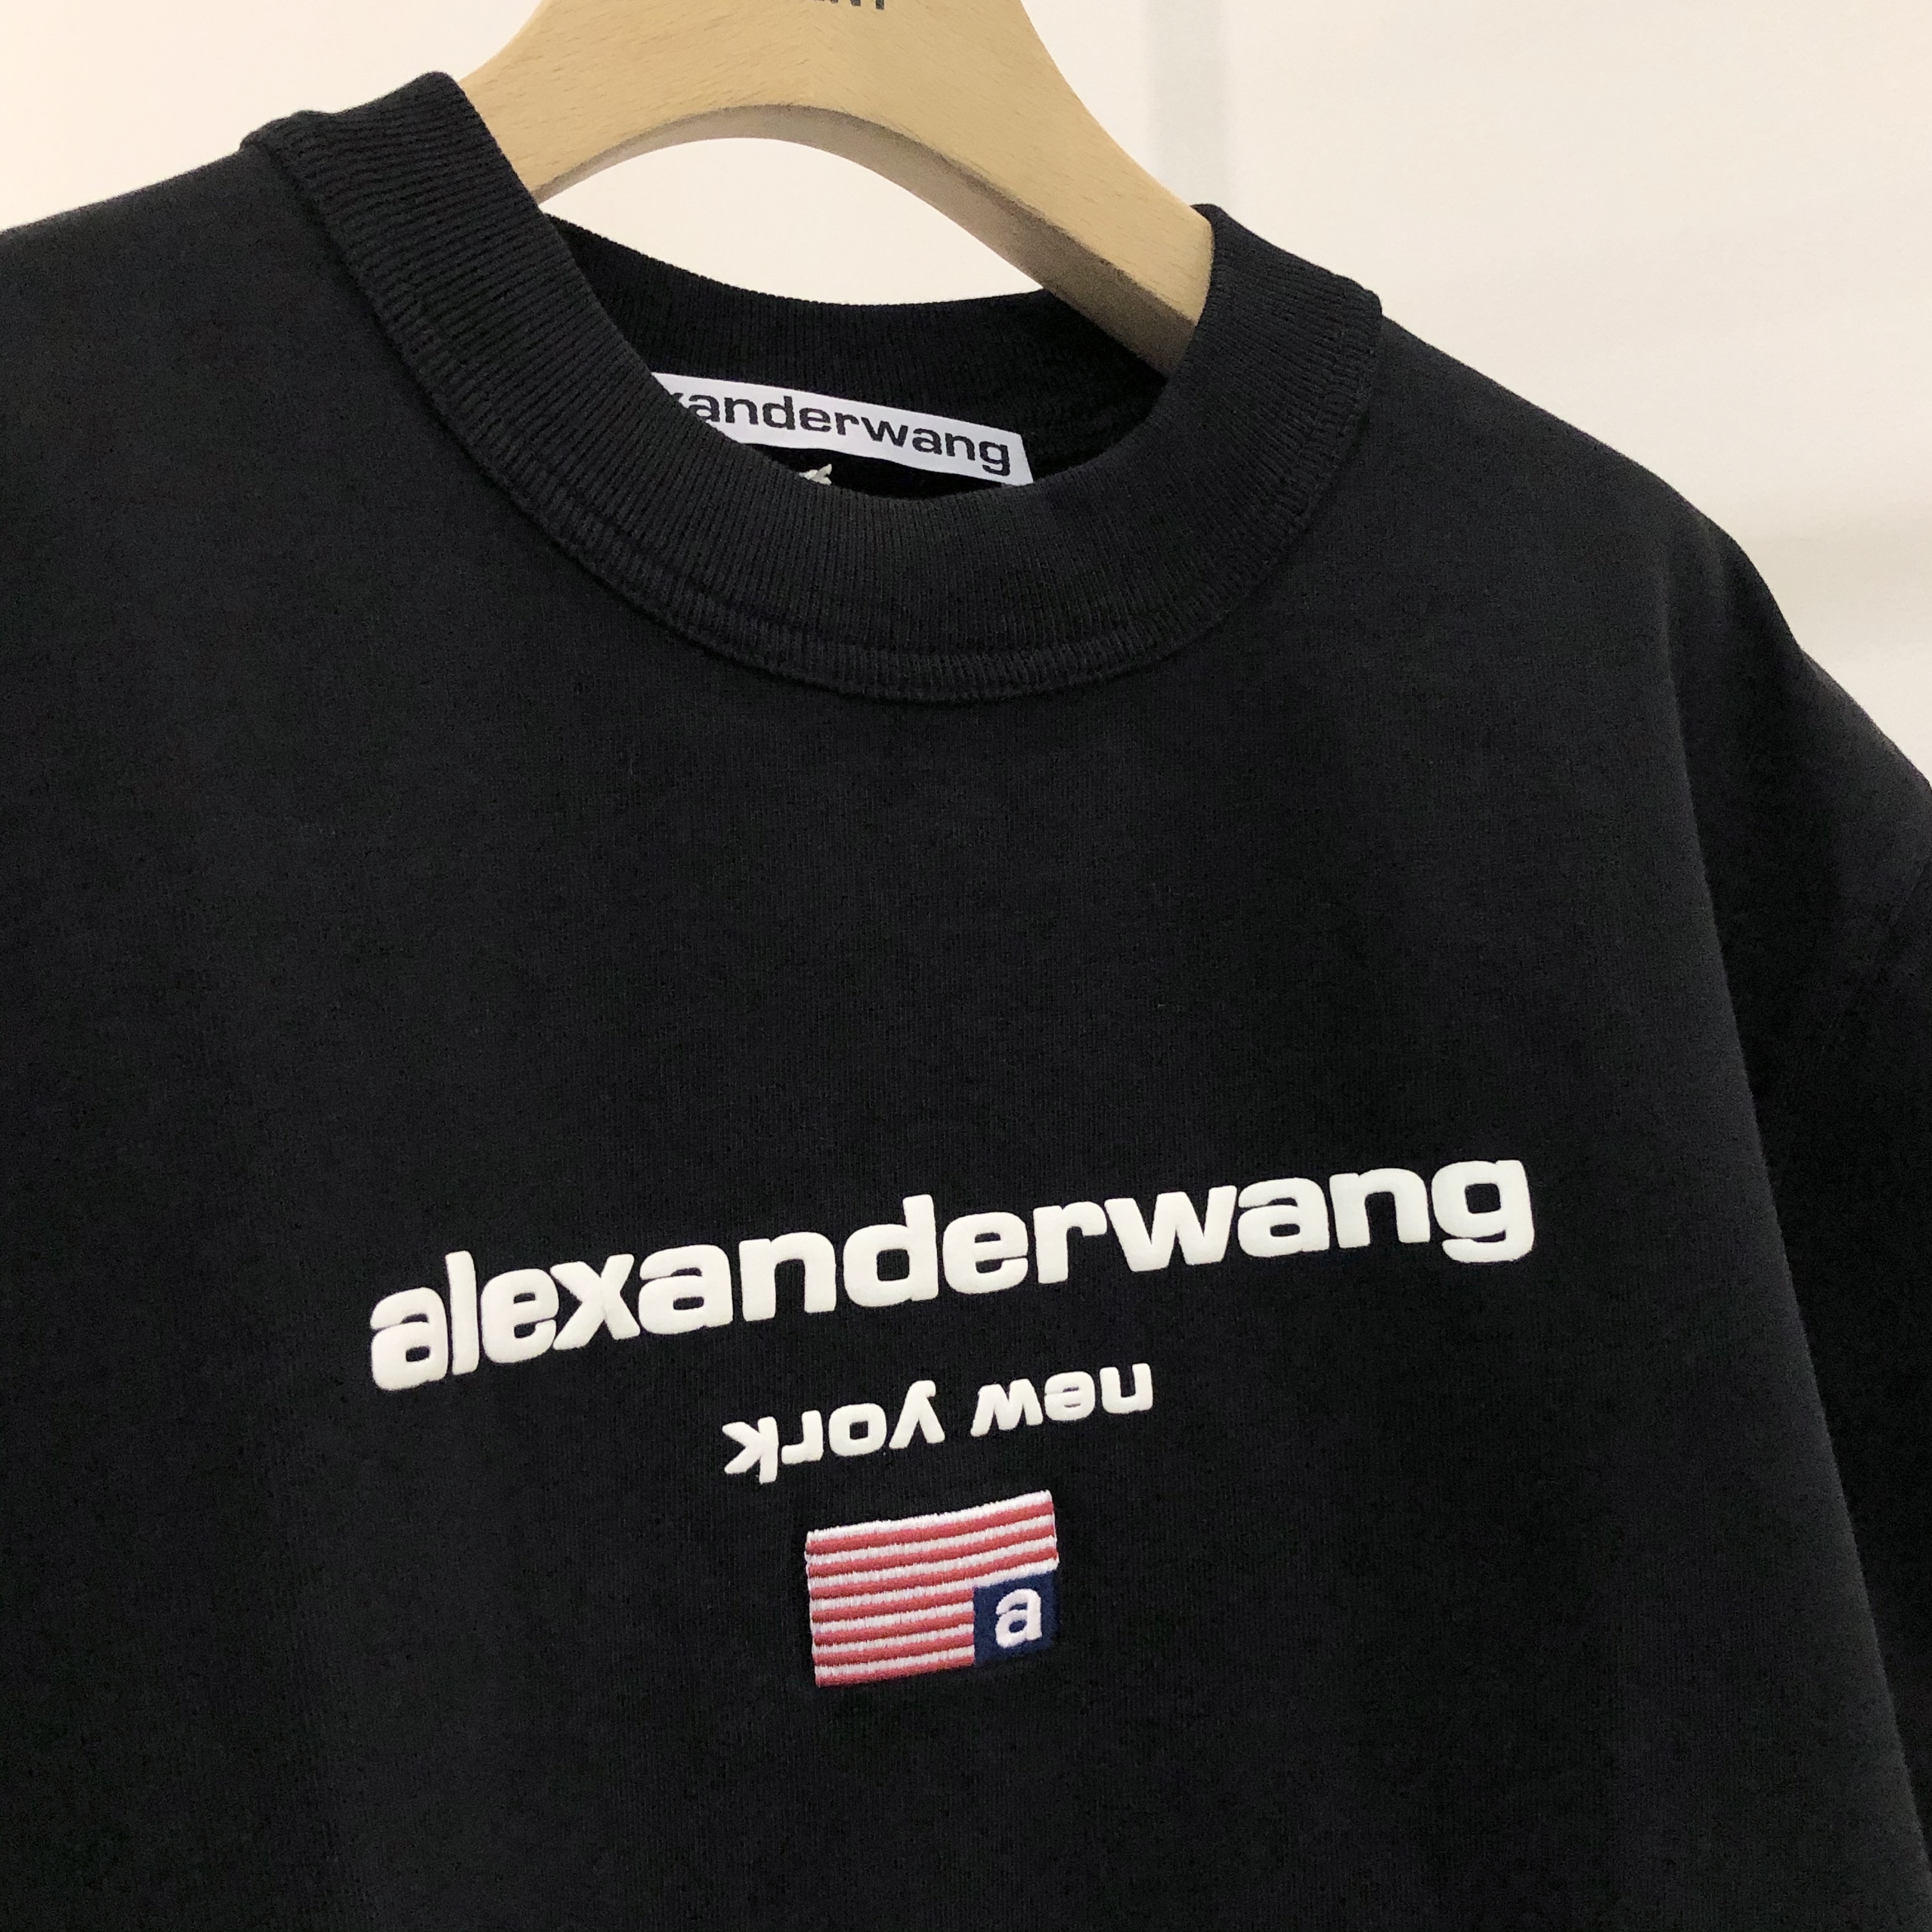 50%OFF ALEXANDER WANG(アレキサンダーワン)Tシャツ - Tシャツ 